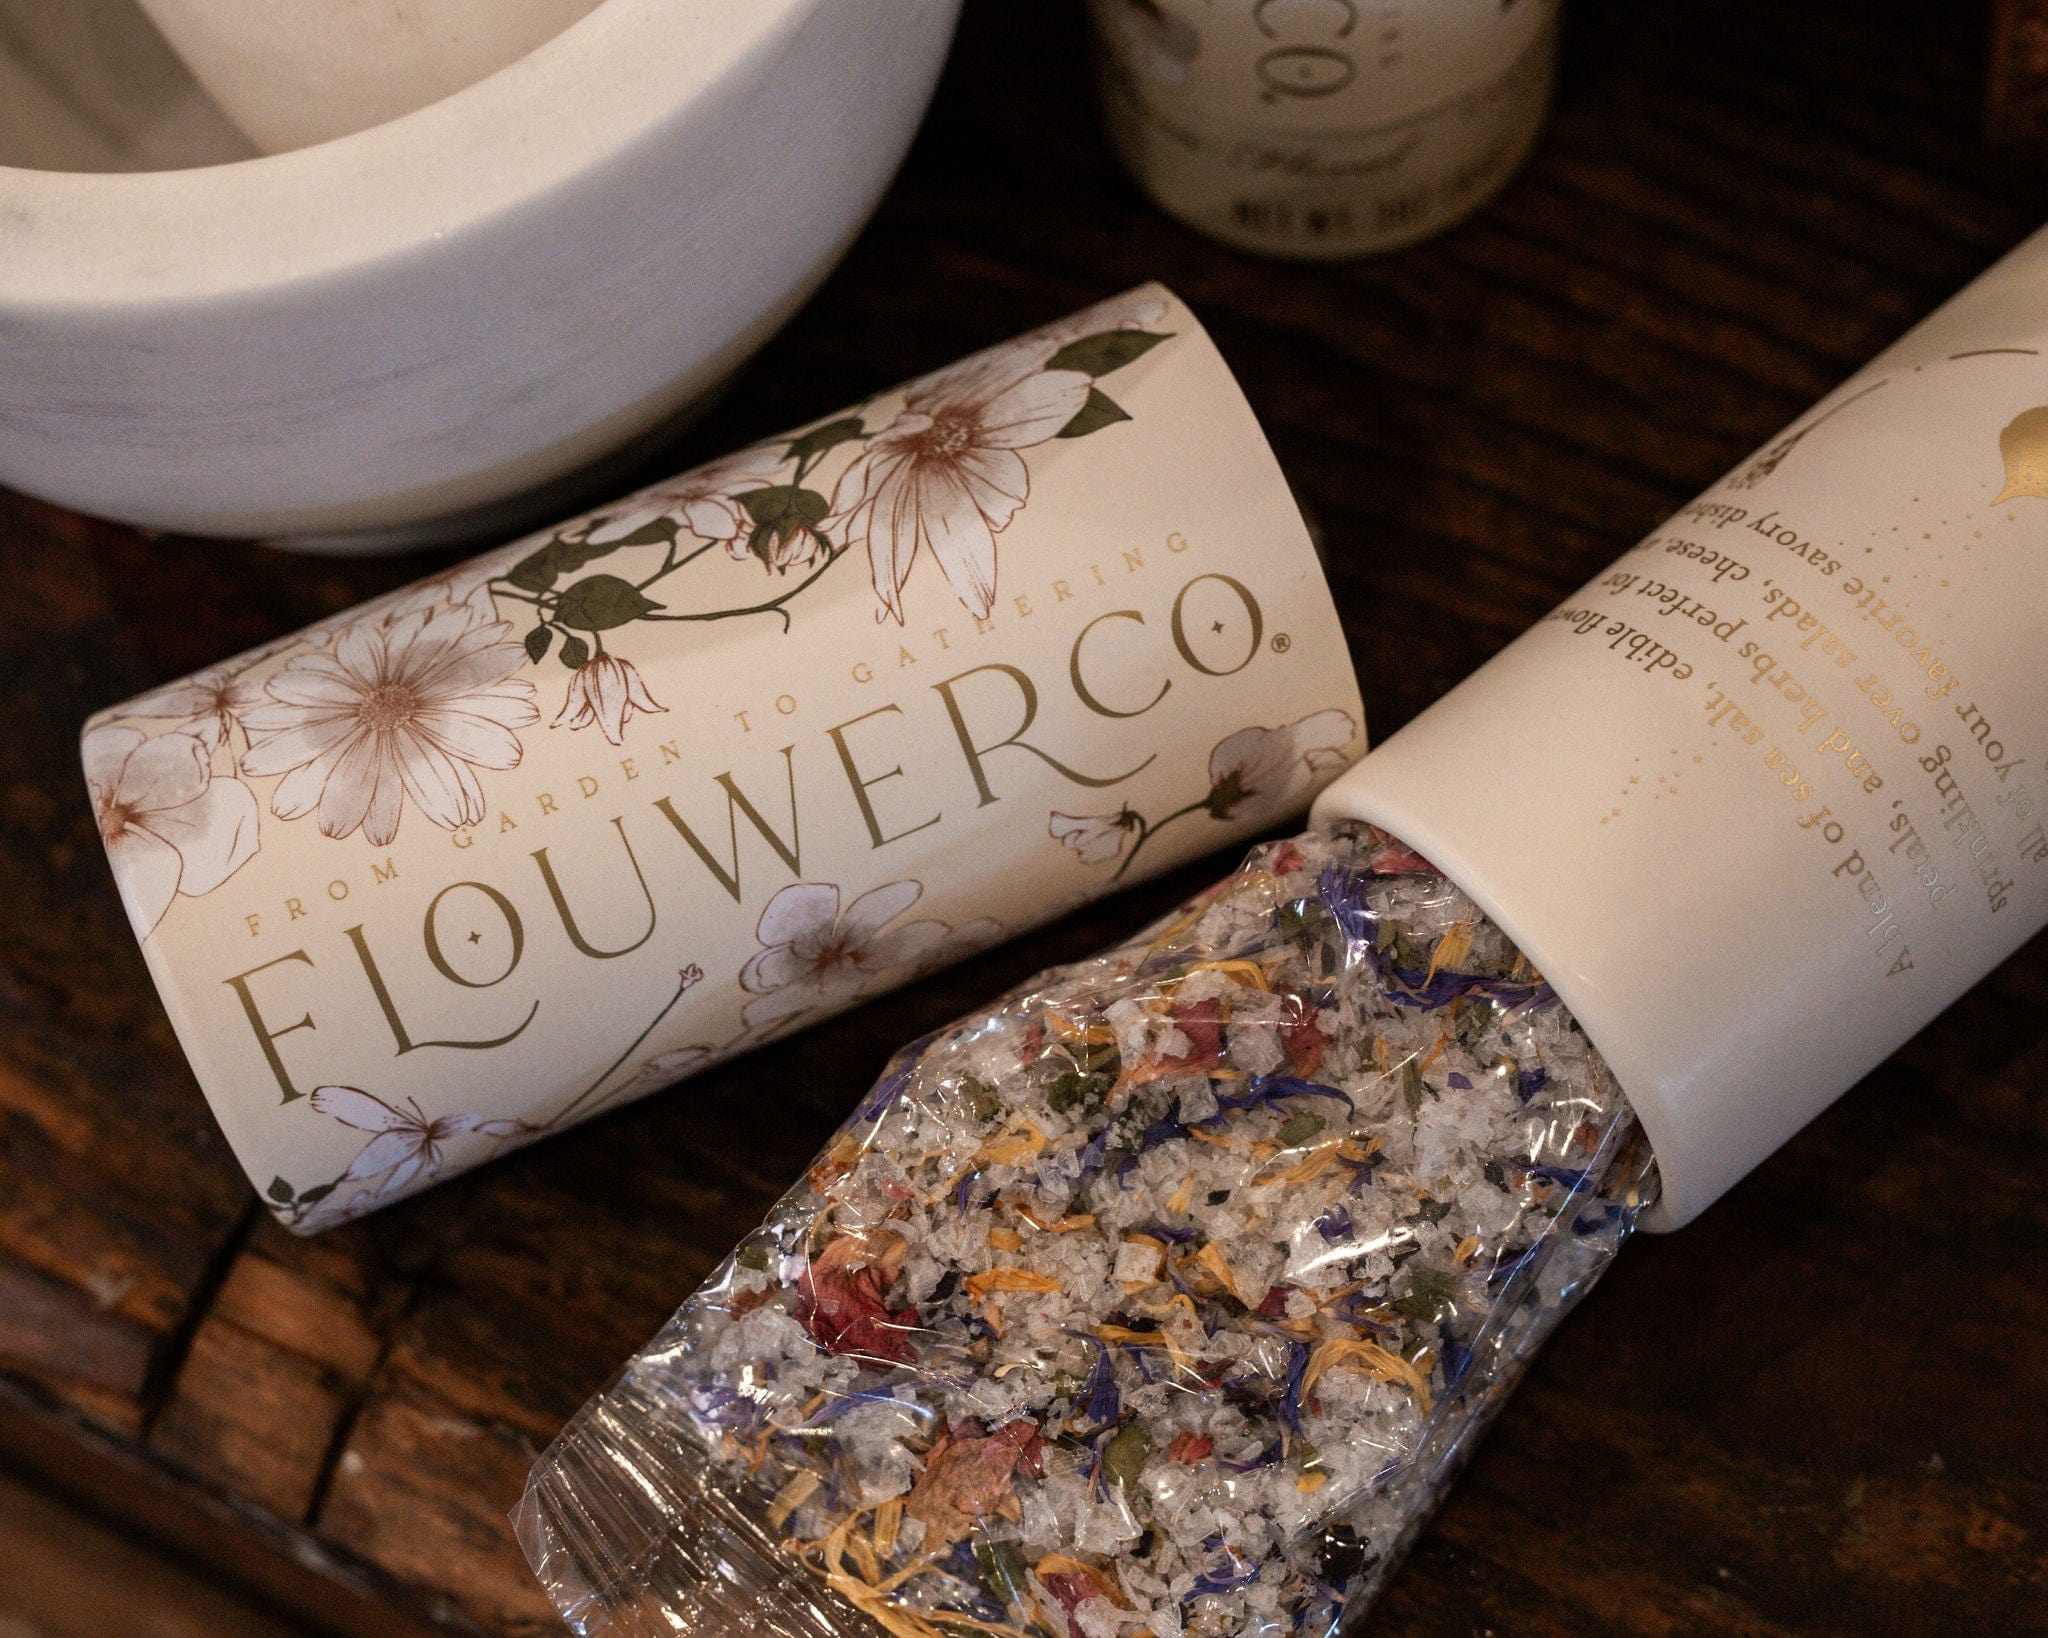 Flouwer Co. Elixirs/Cocktails Classic Floral Garnishing Salt